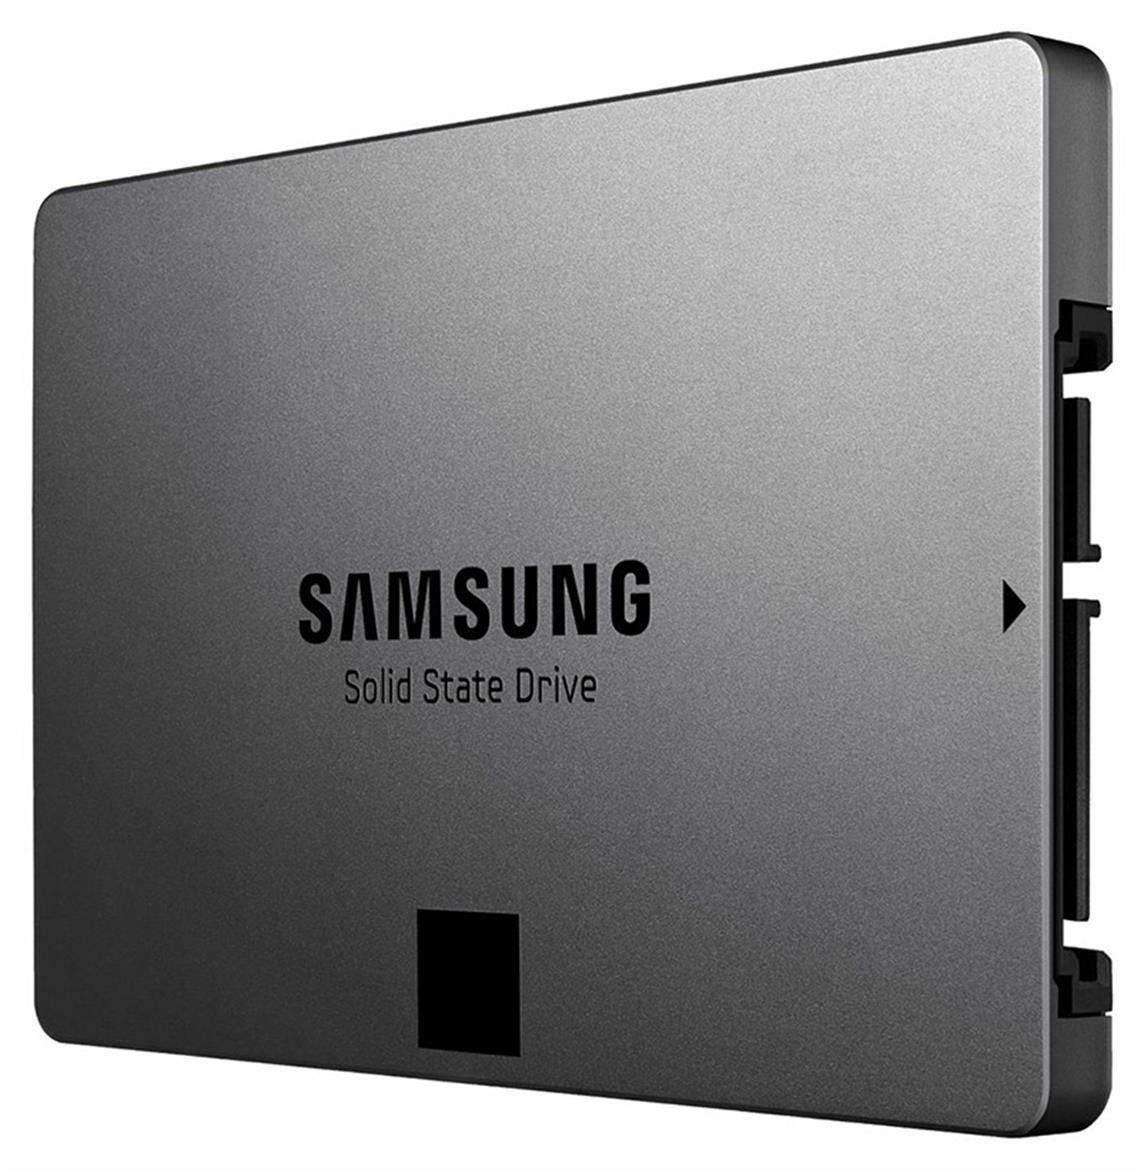 Samsung SSD 840 EVO 250GB & 1TB Drives Tested